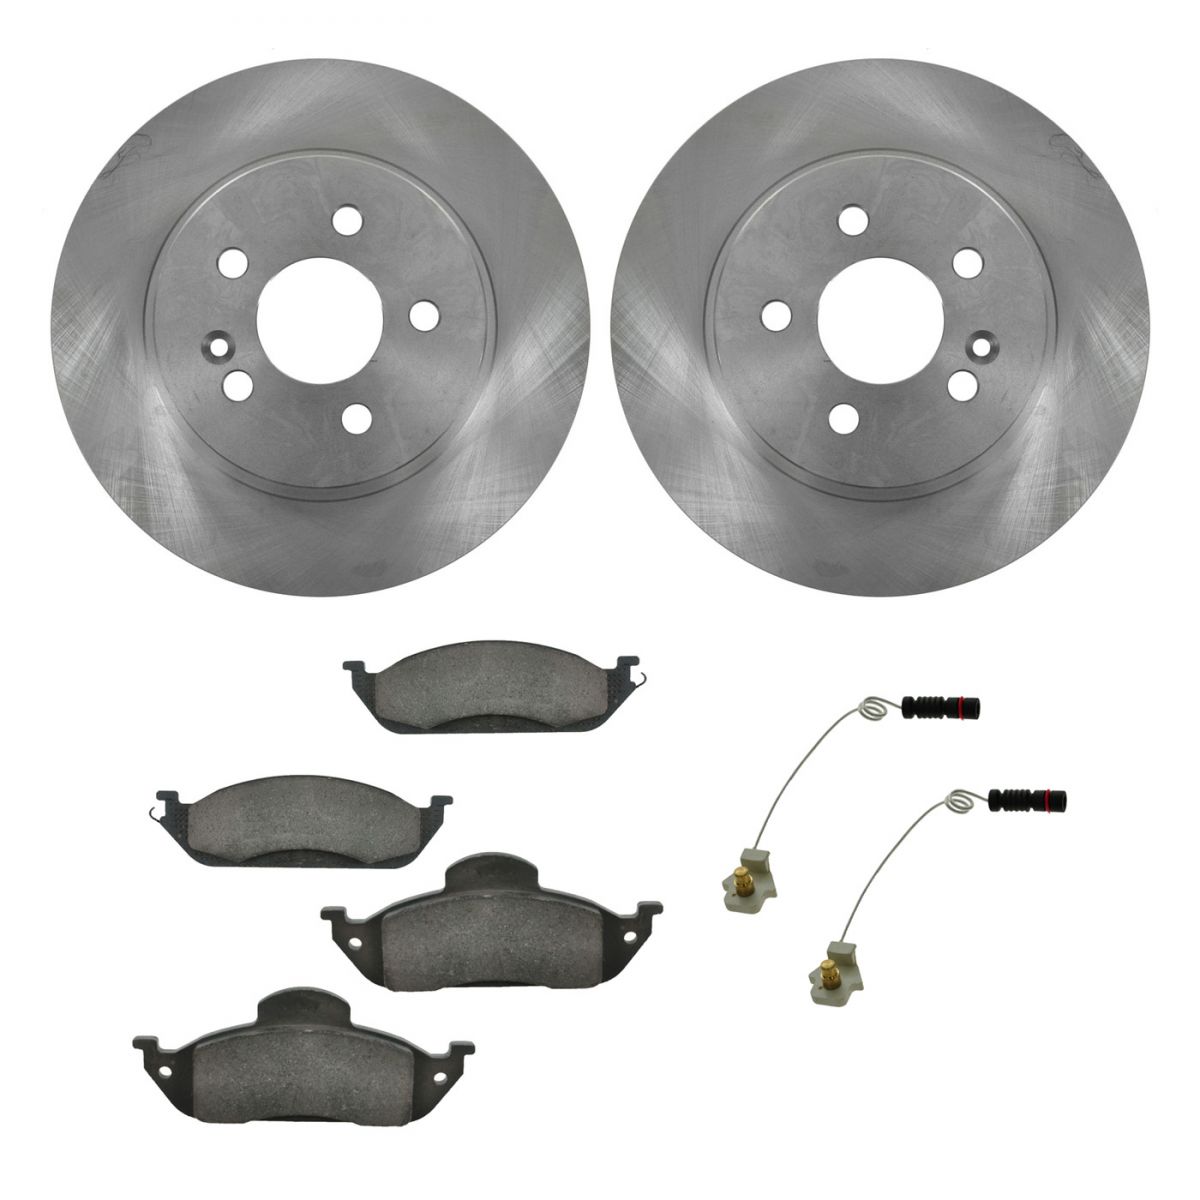 Mercedes benz rotors and pads #4